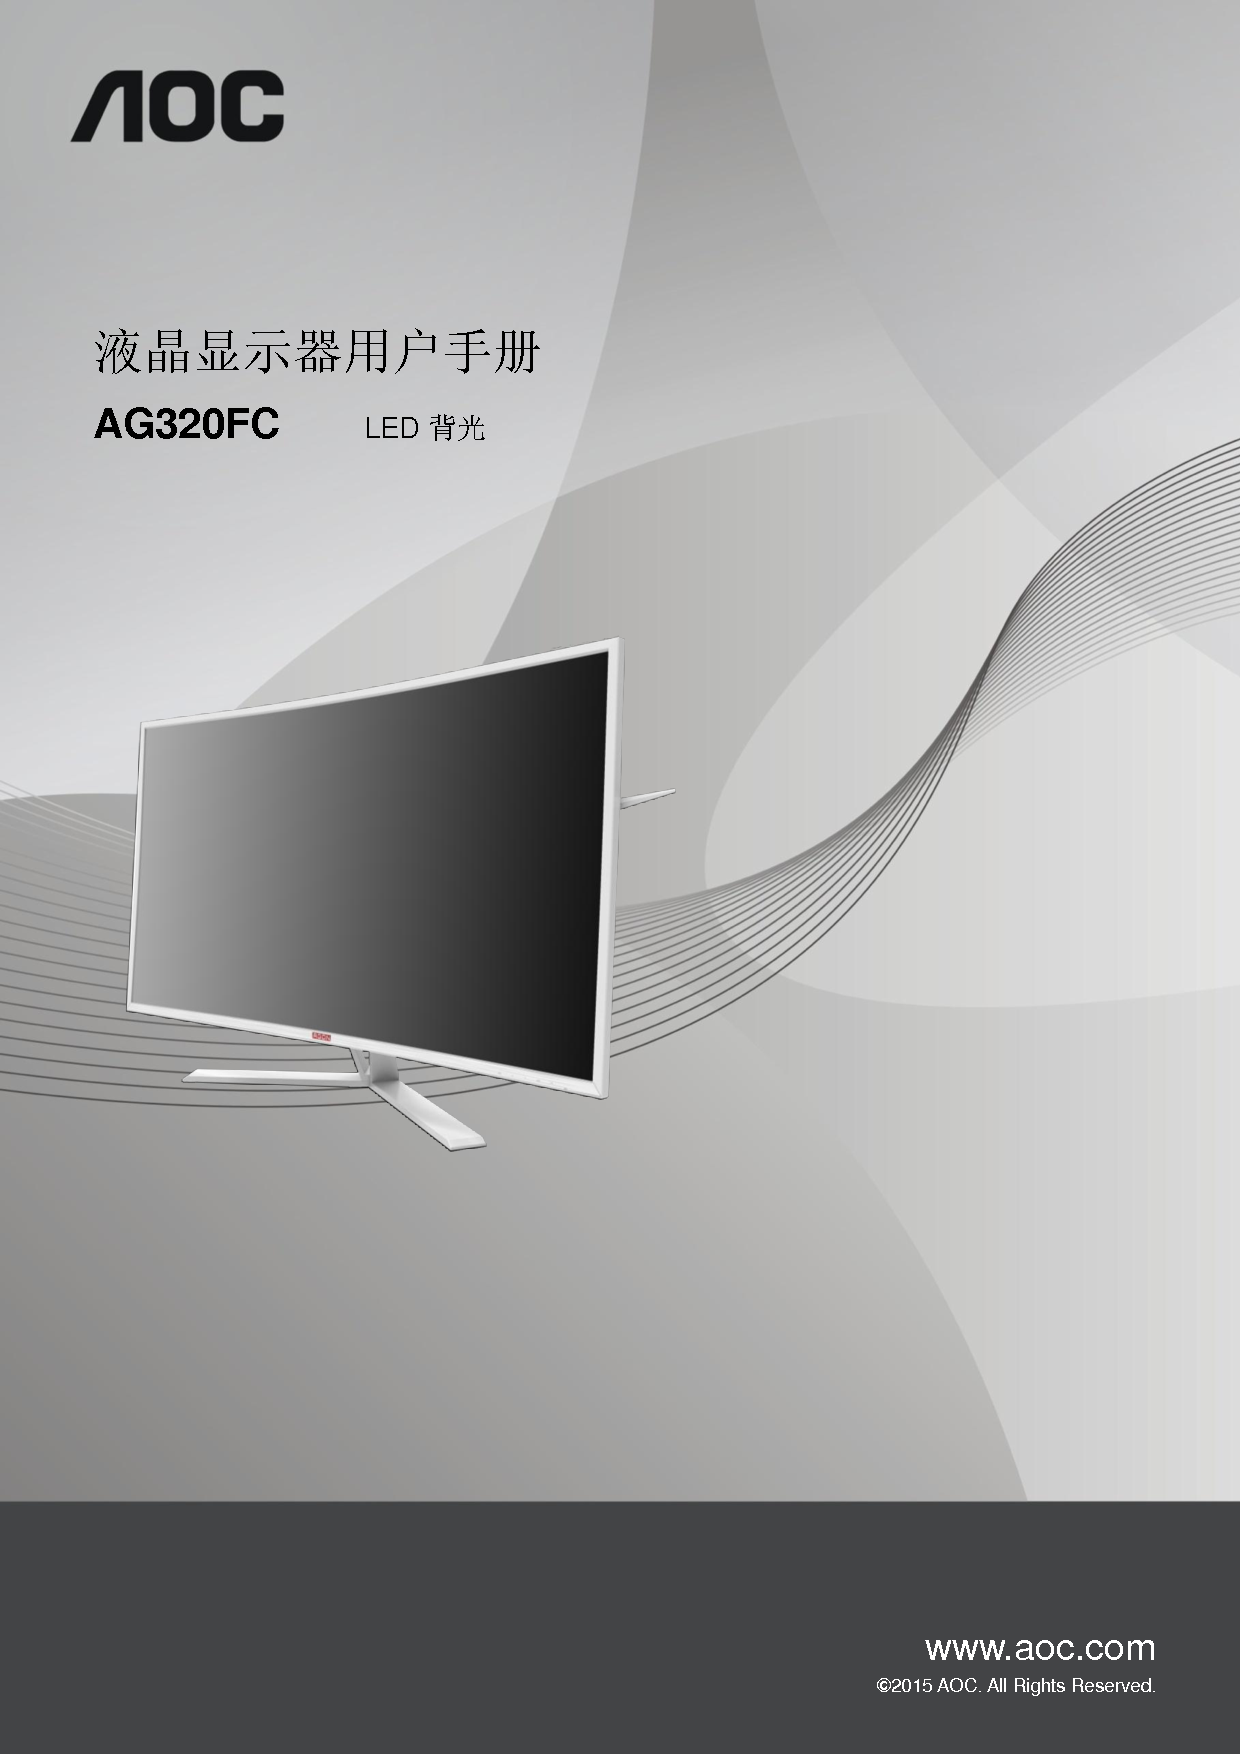 AOC AG320FC 用户手册 封面